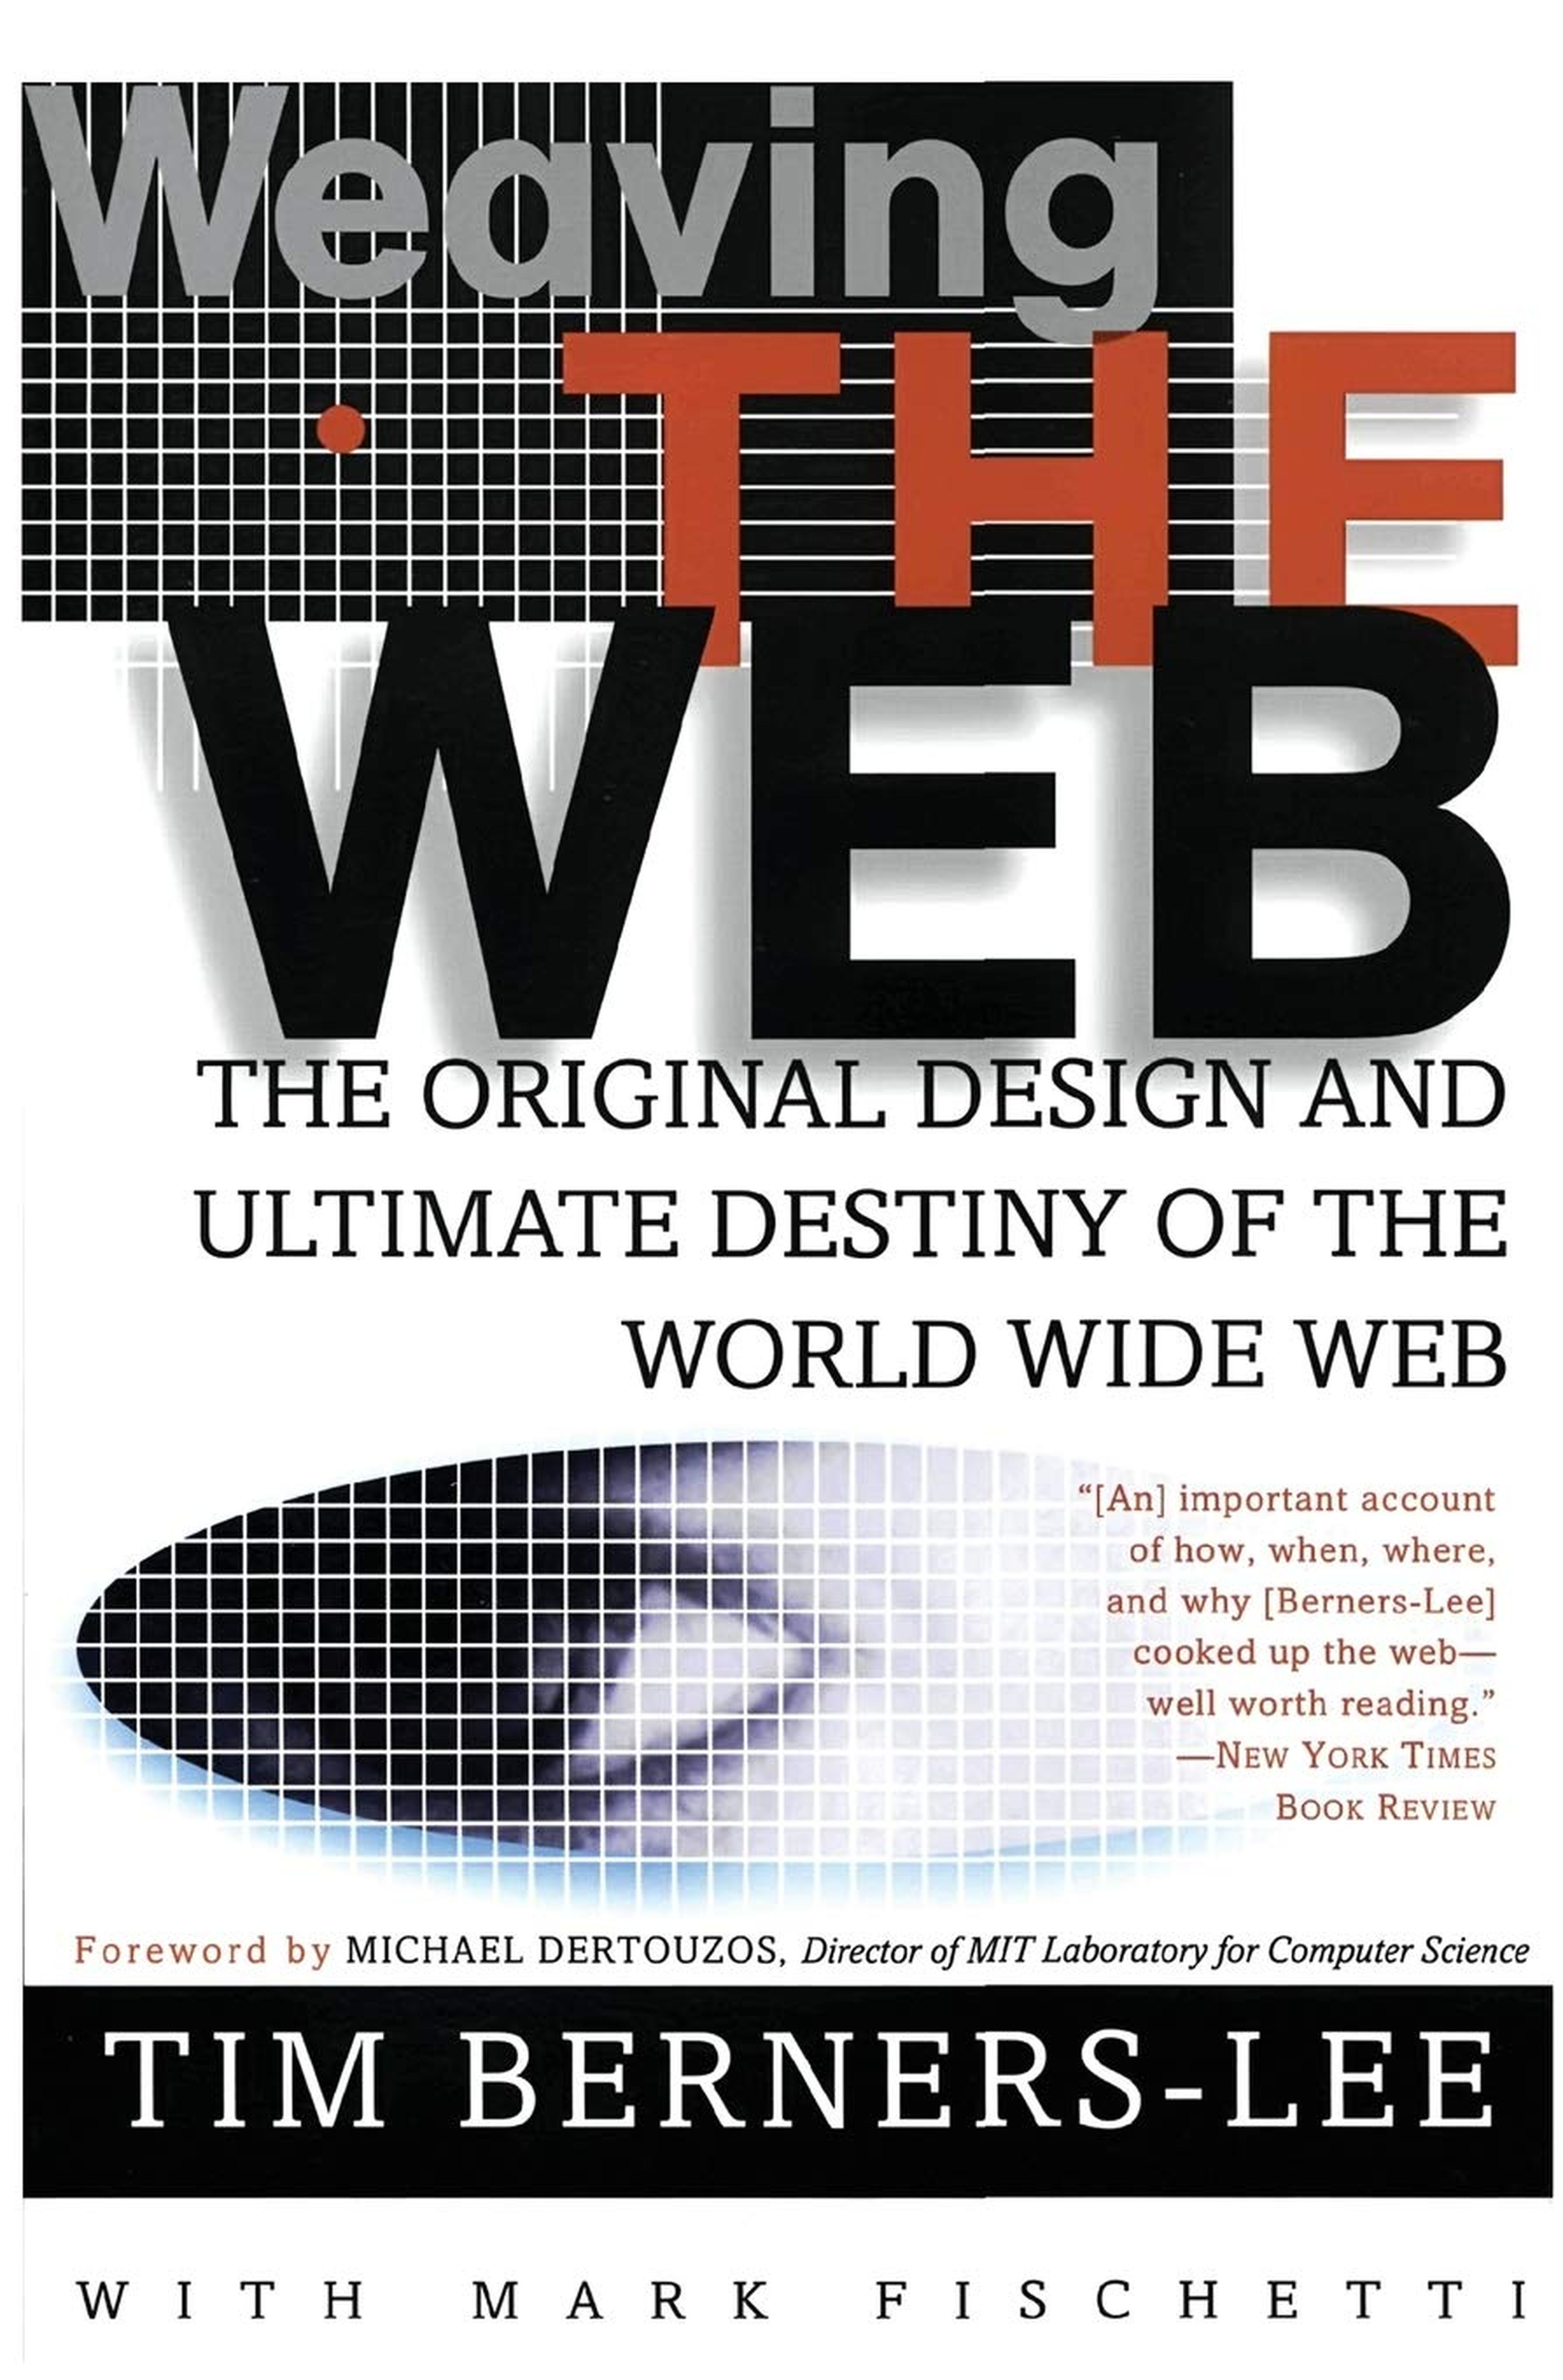 'Weaving the Web'.